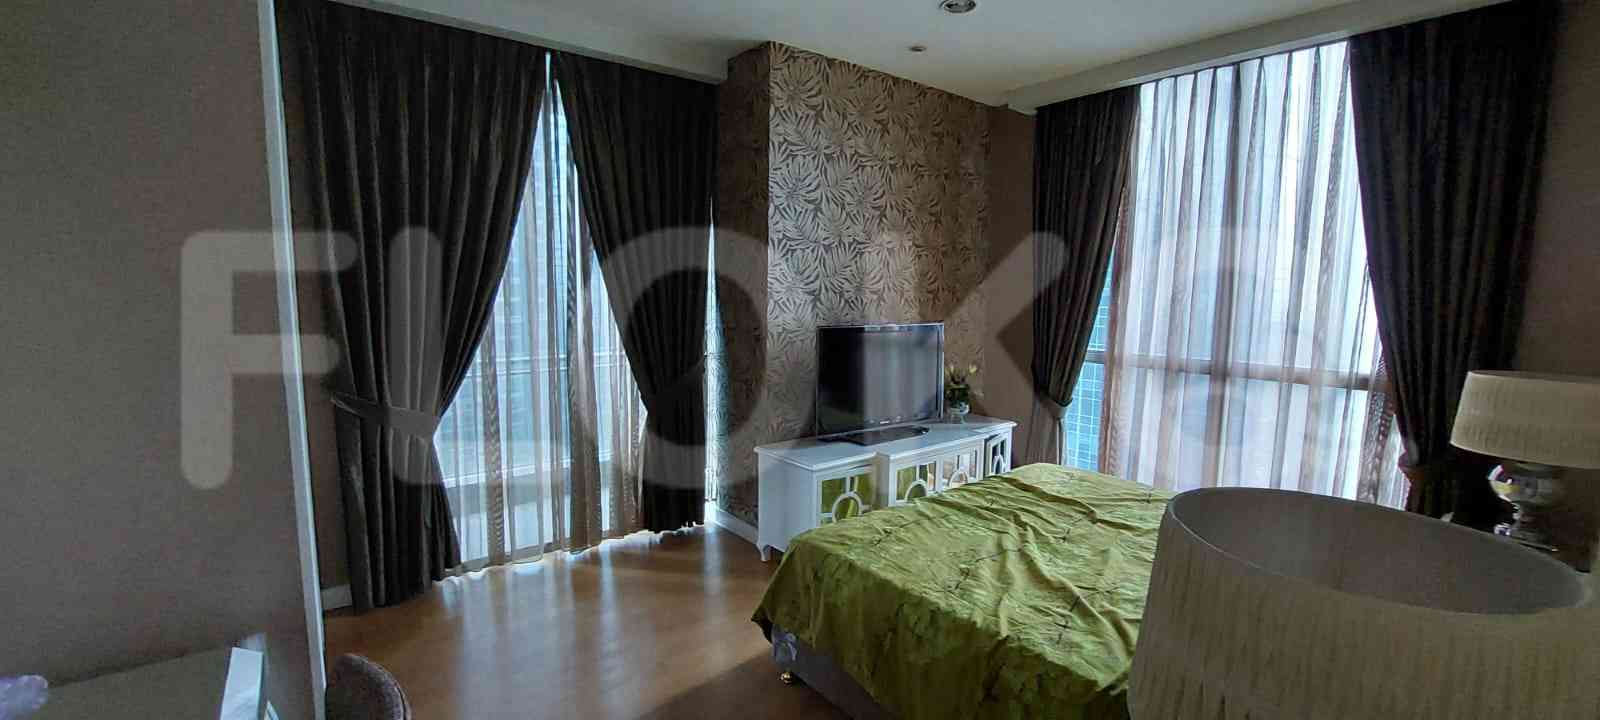 2 Bedroom on 19th Floor for Rent in Kemang Village Residence - fkeb83 4